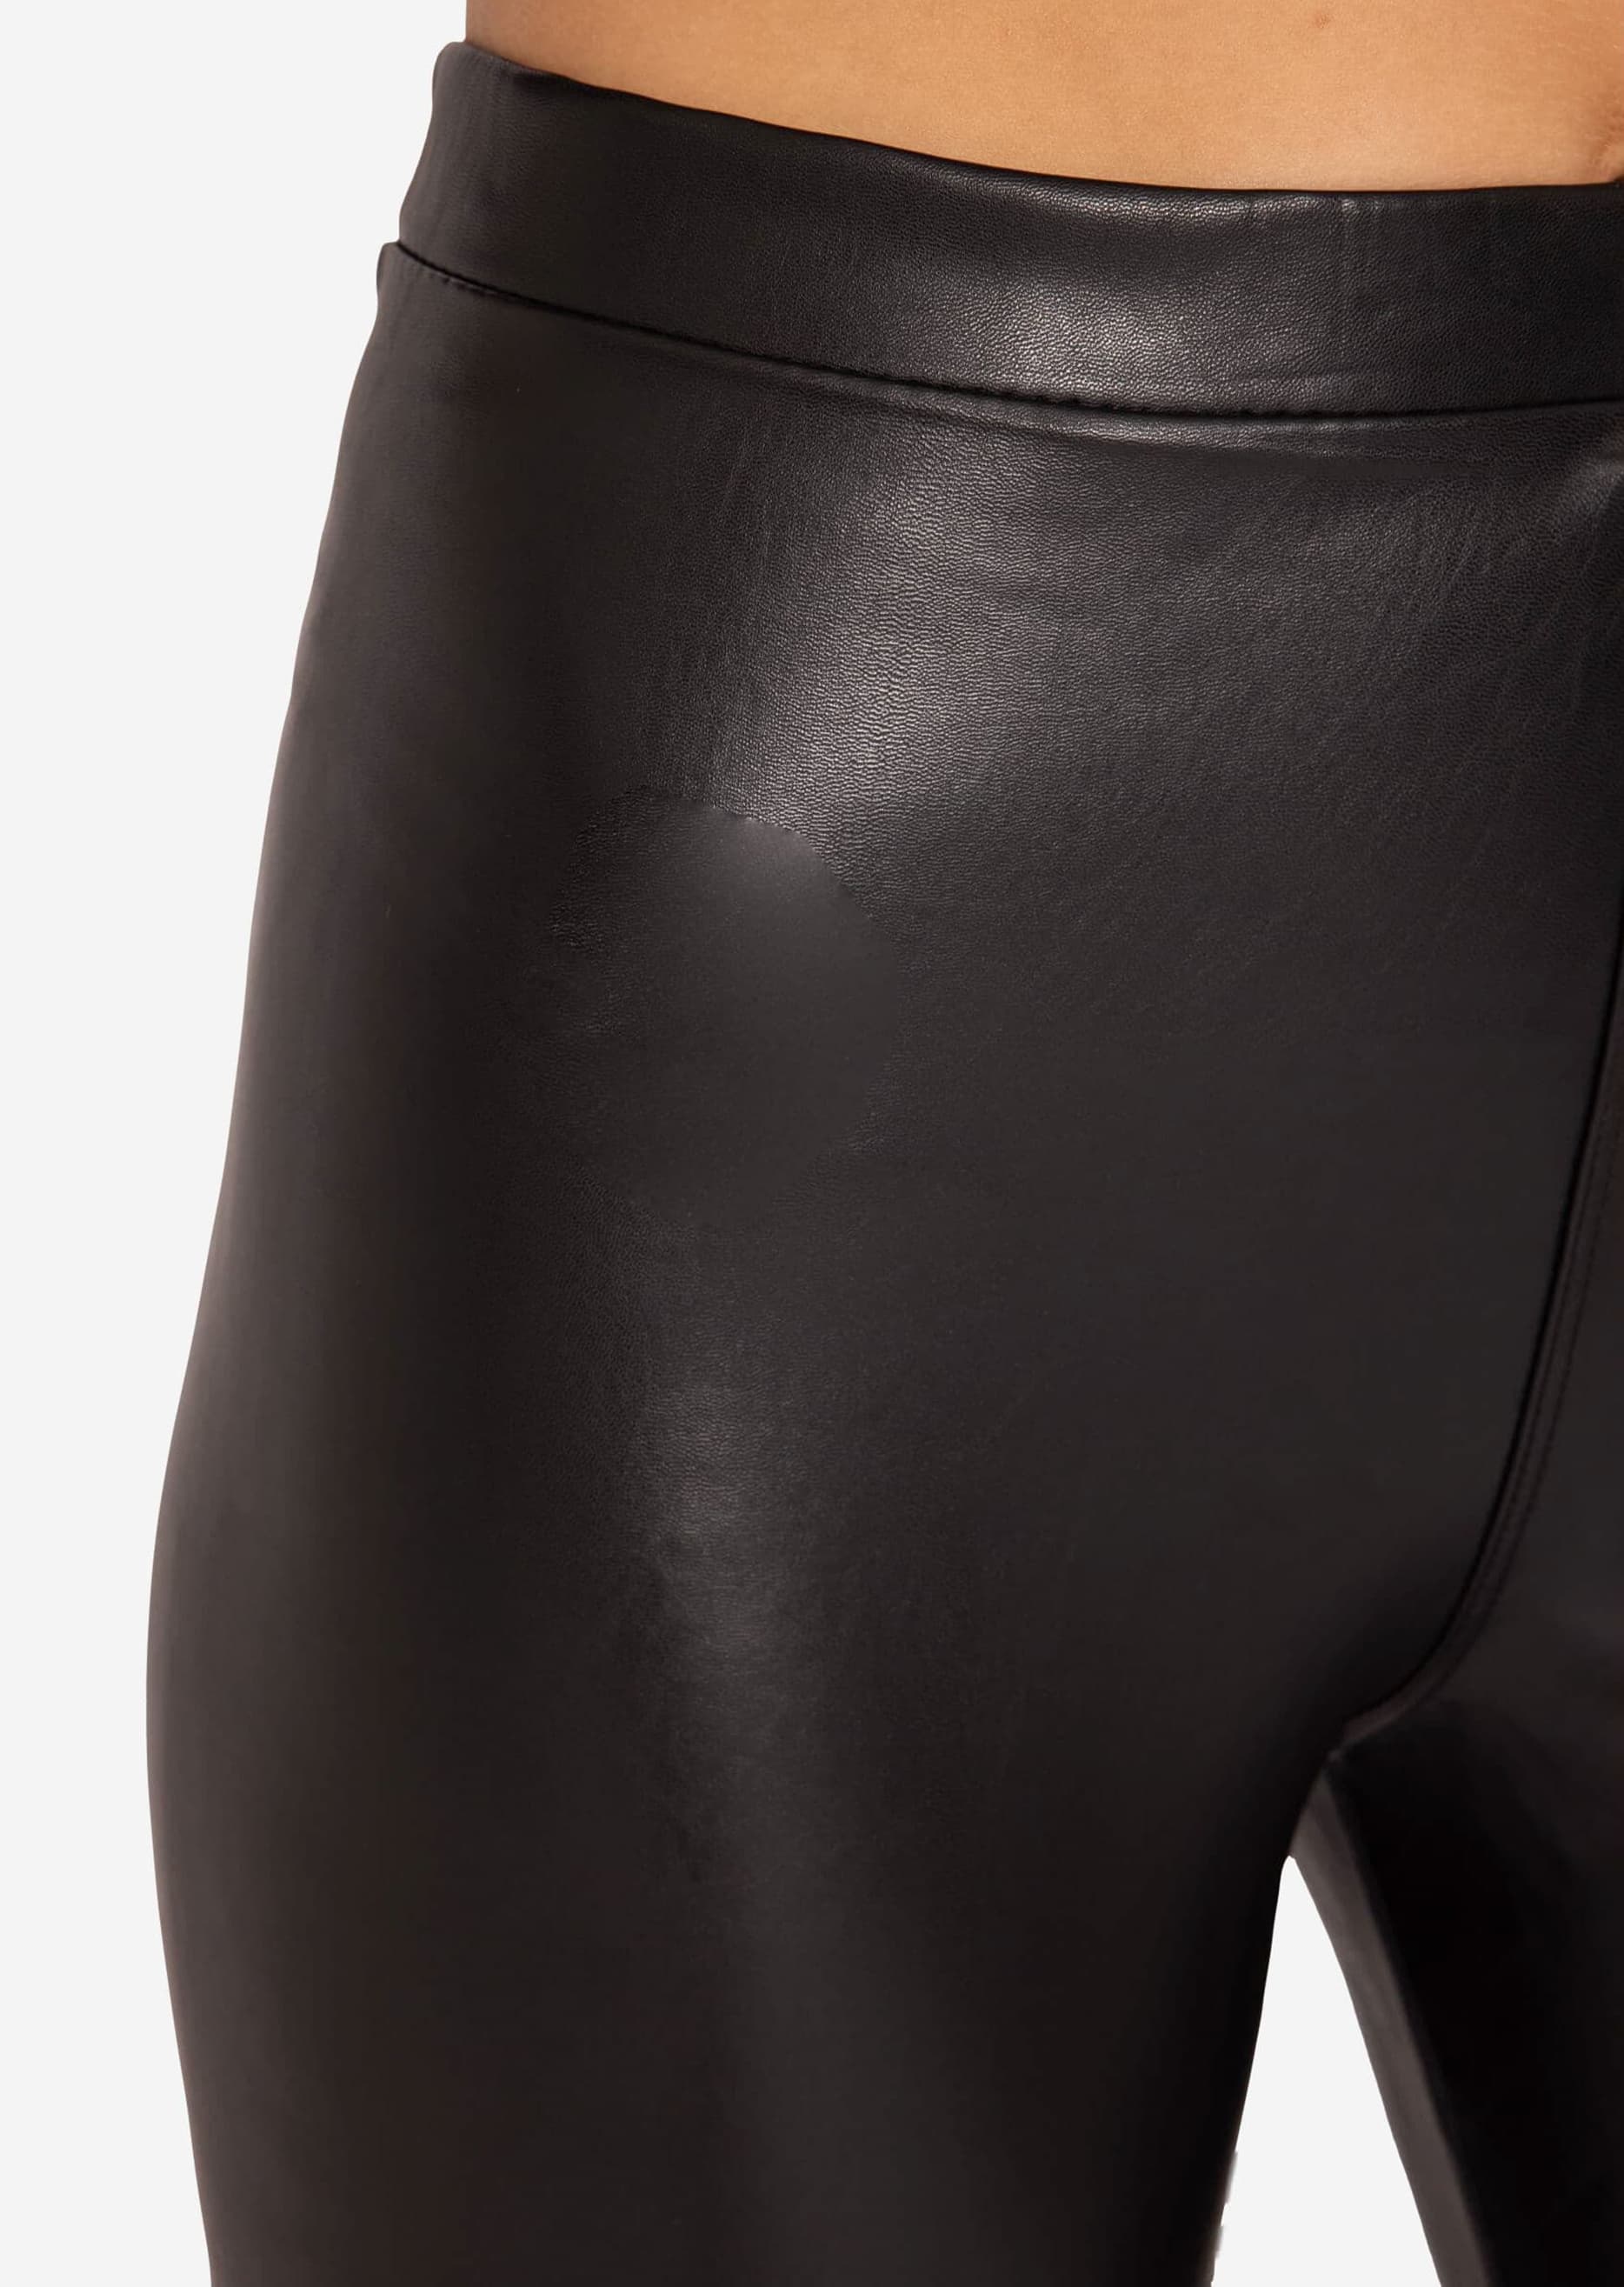 Calzedonia LEATHER EFFECT - Leggings - Trousers - schwarz black